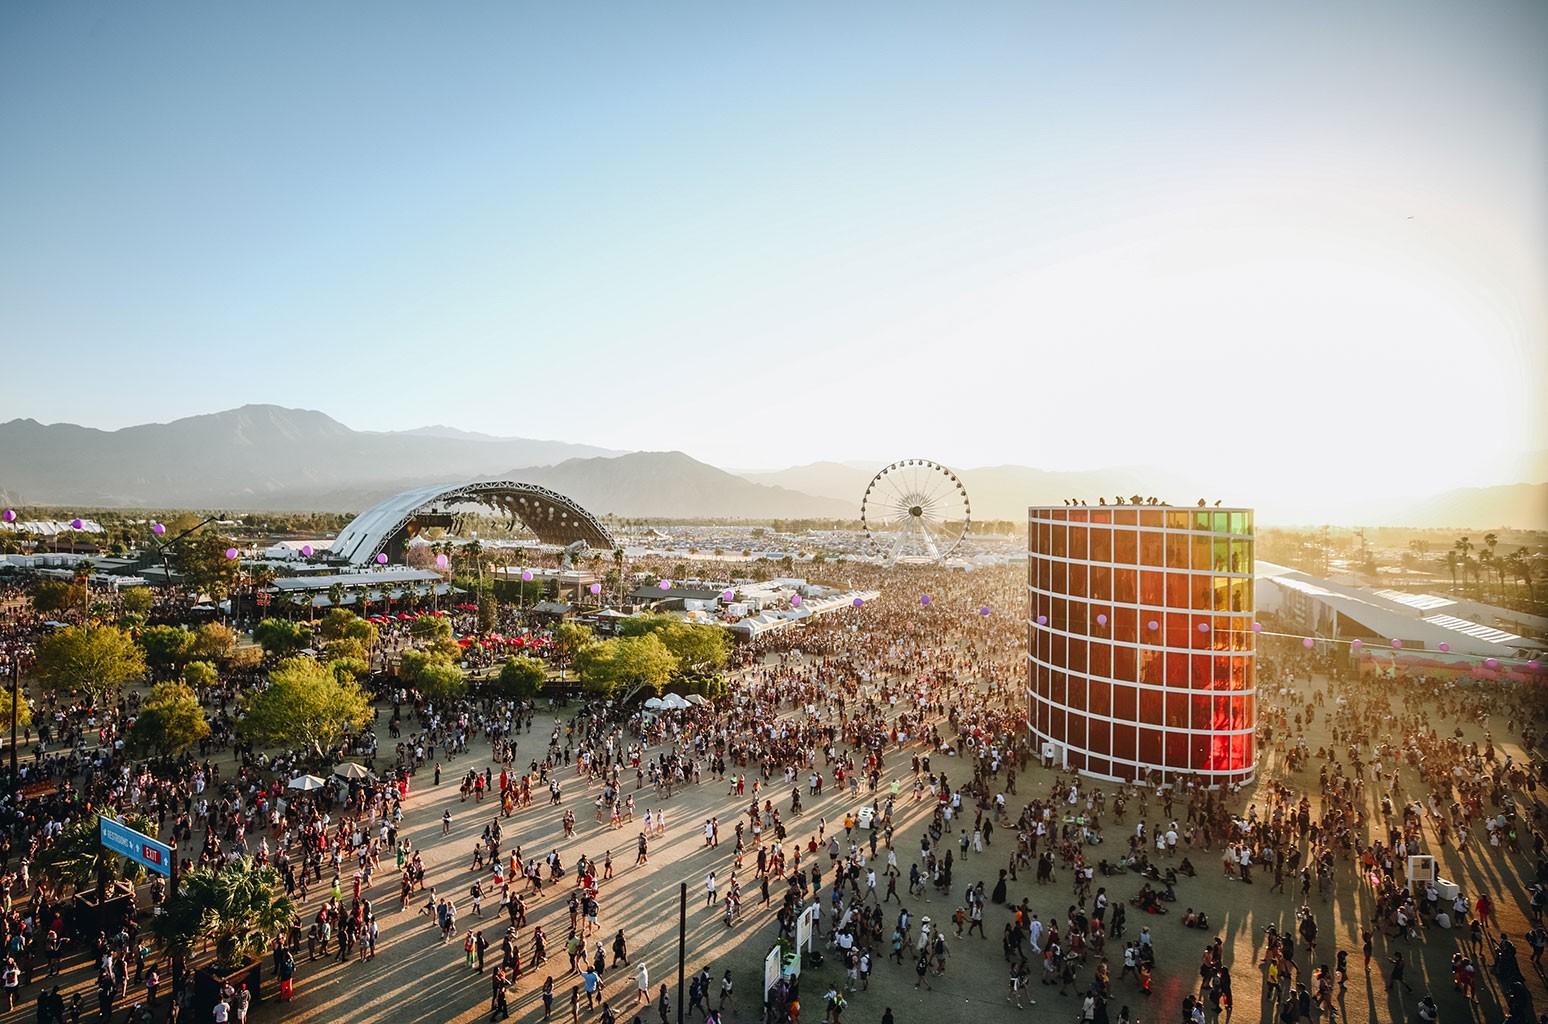 Due to coronavirus, Coachella- Stagecoach music festivals canceled for 2021